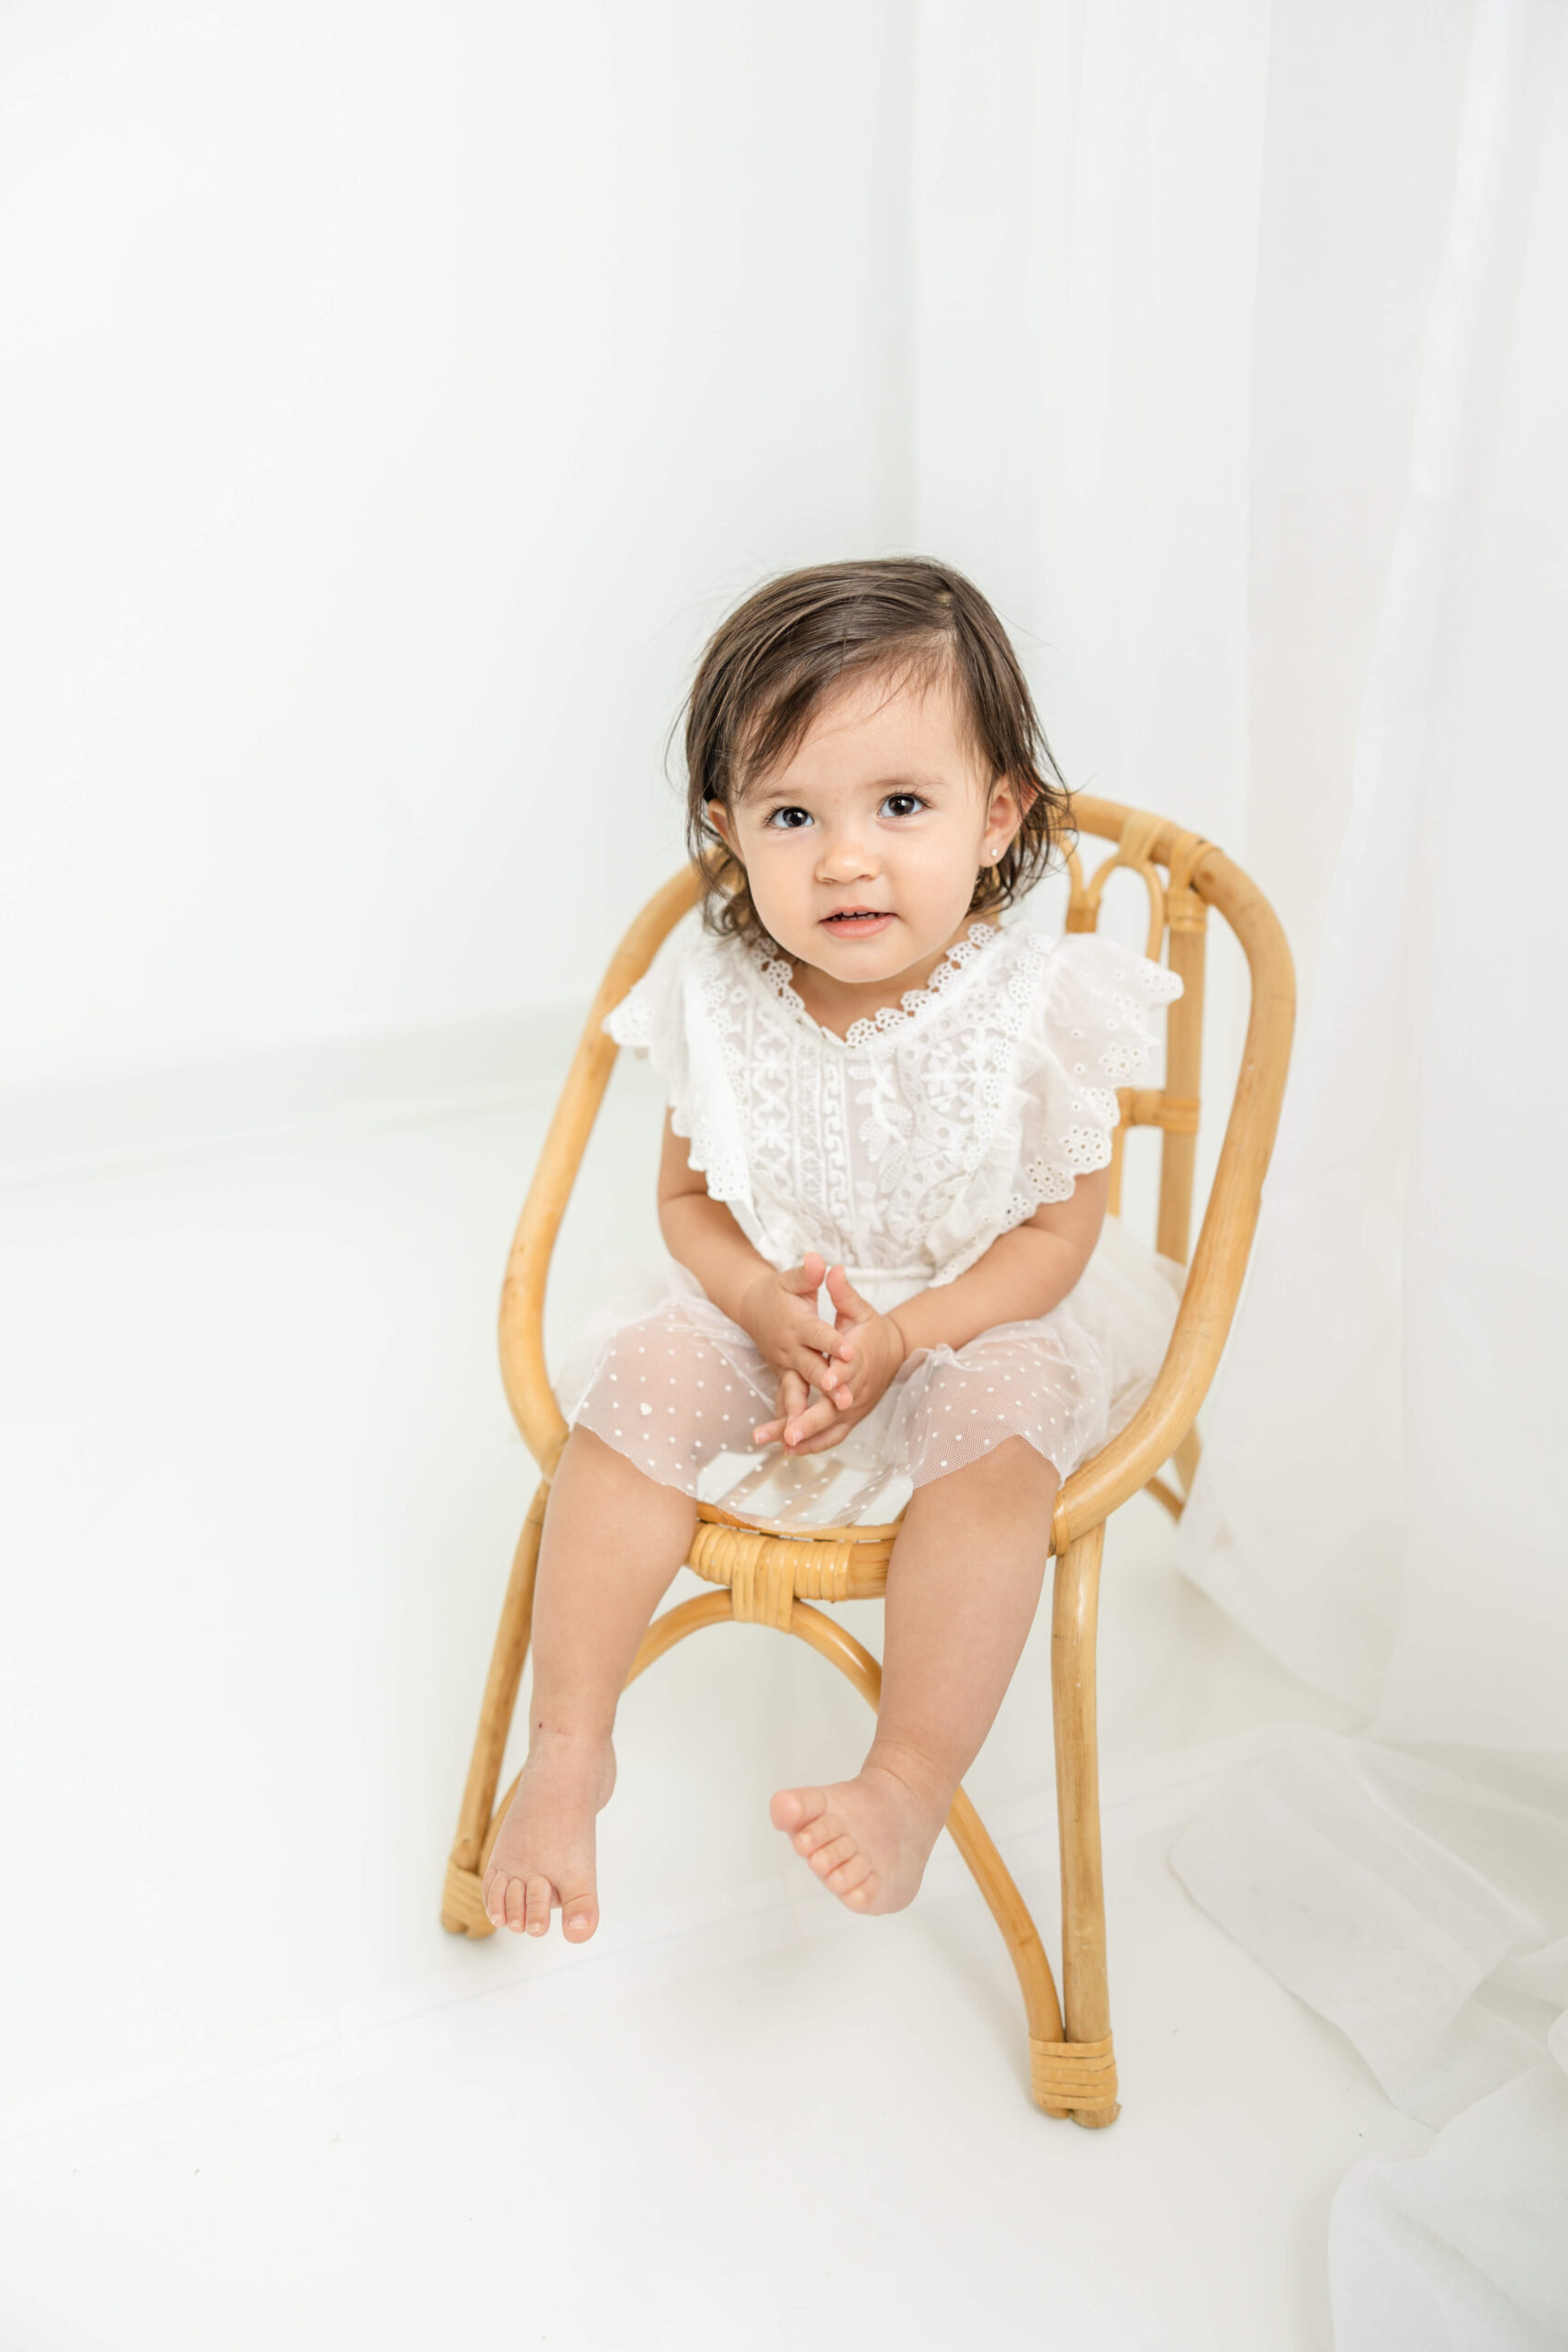 Little girl in white romper sitting in a wicker brown chair.